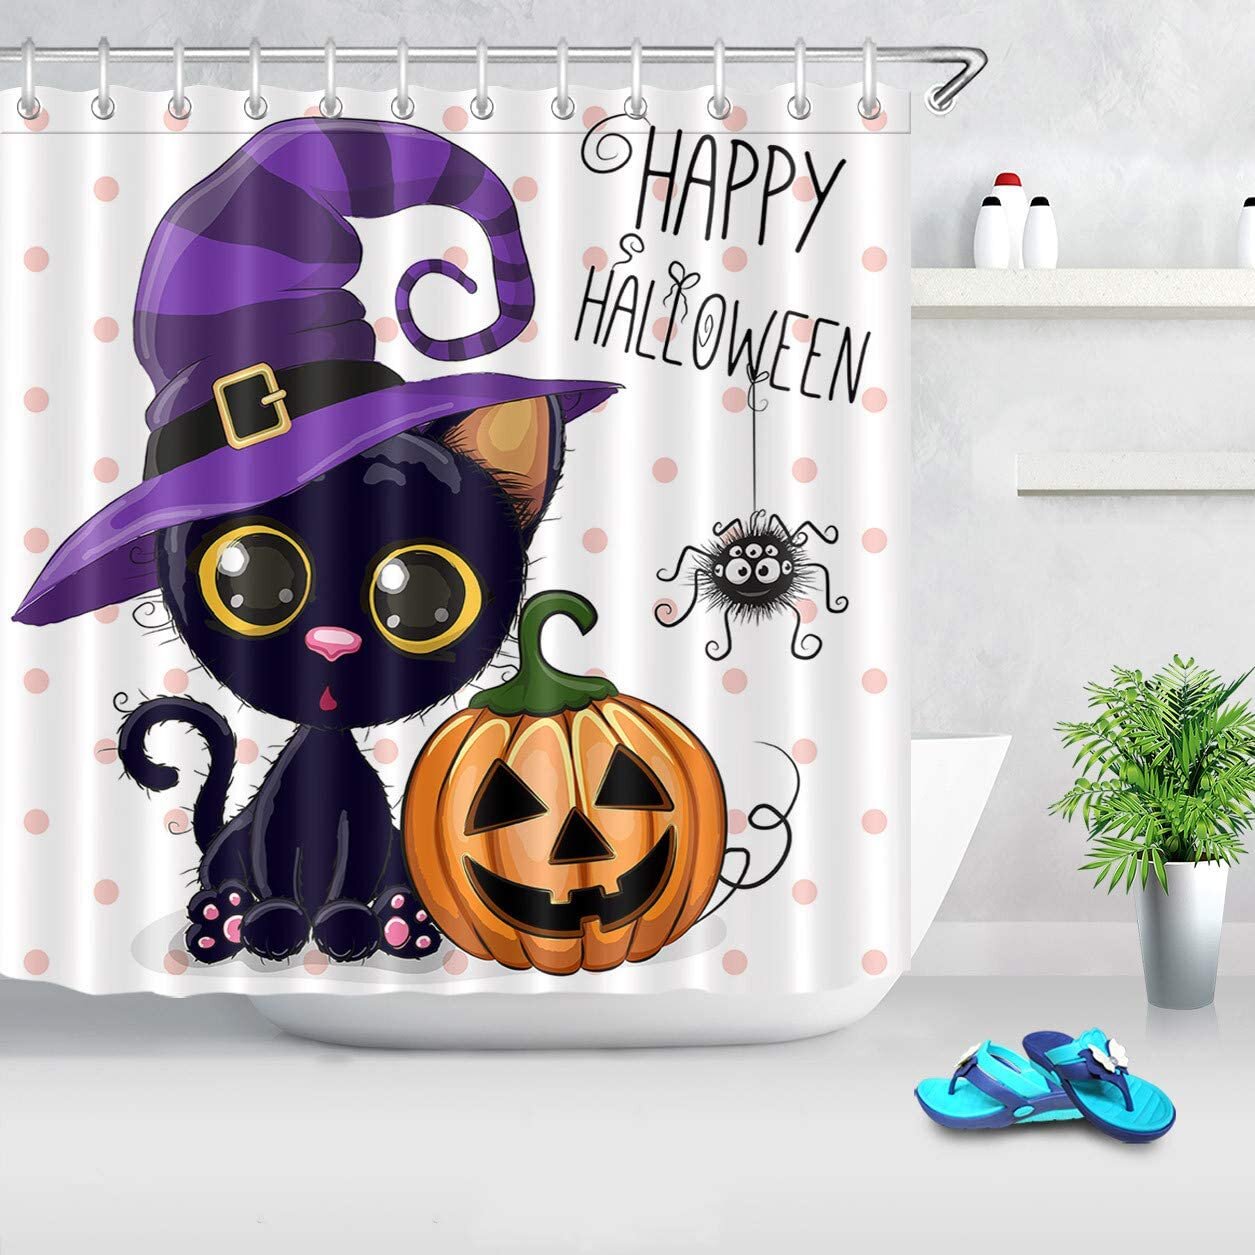 Waterproof Bathroom Shower Curtain Hallowee Pumpkin Polyester Fabric w/Hooks 72" 